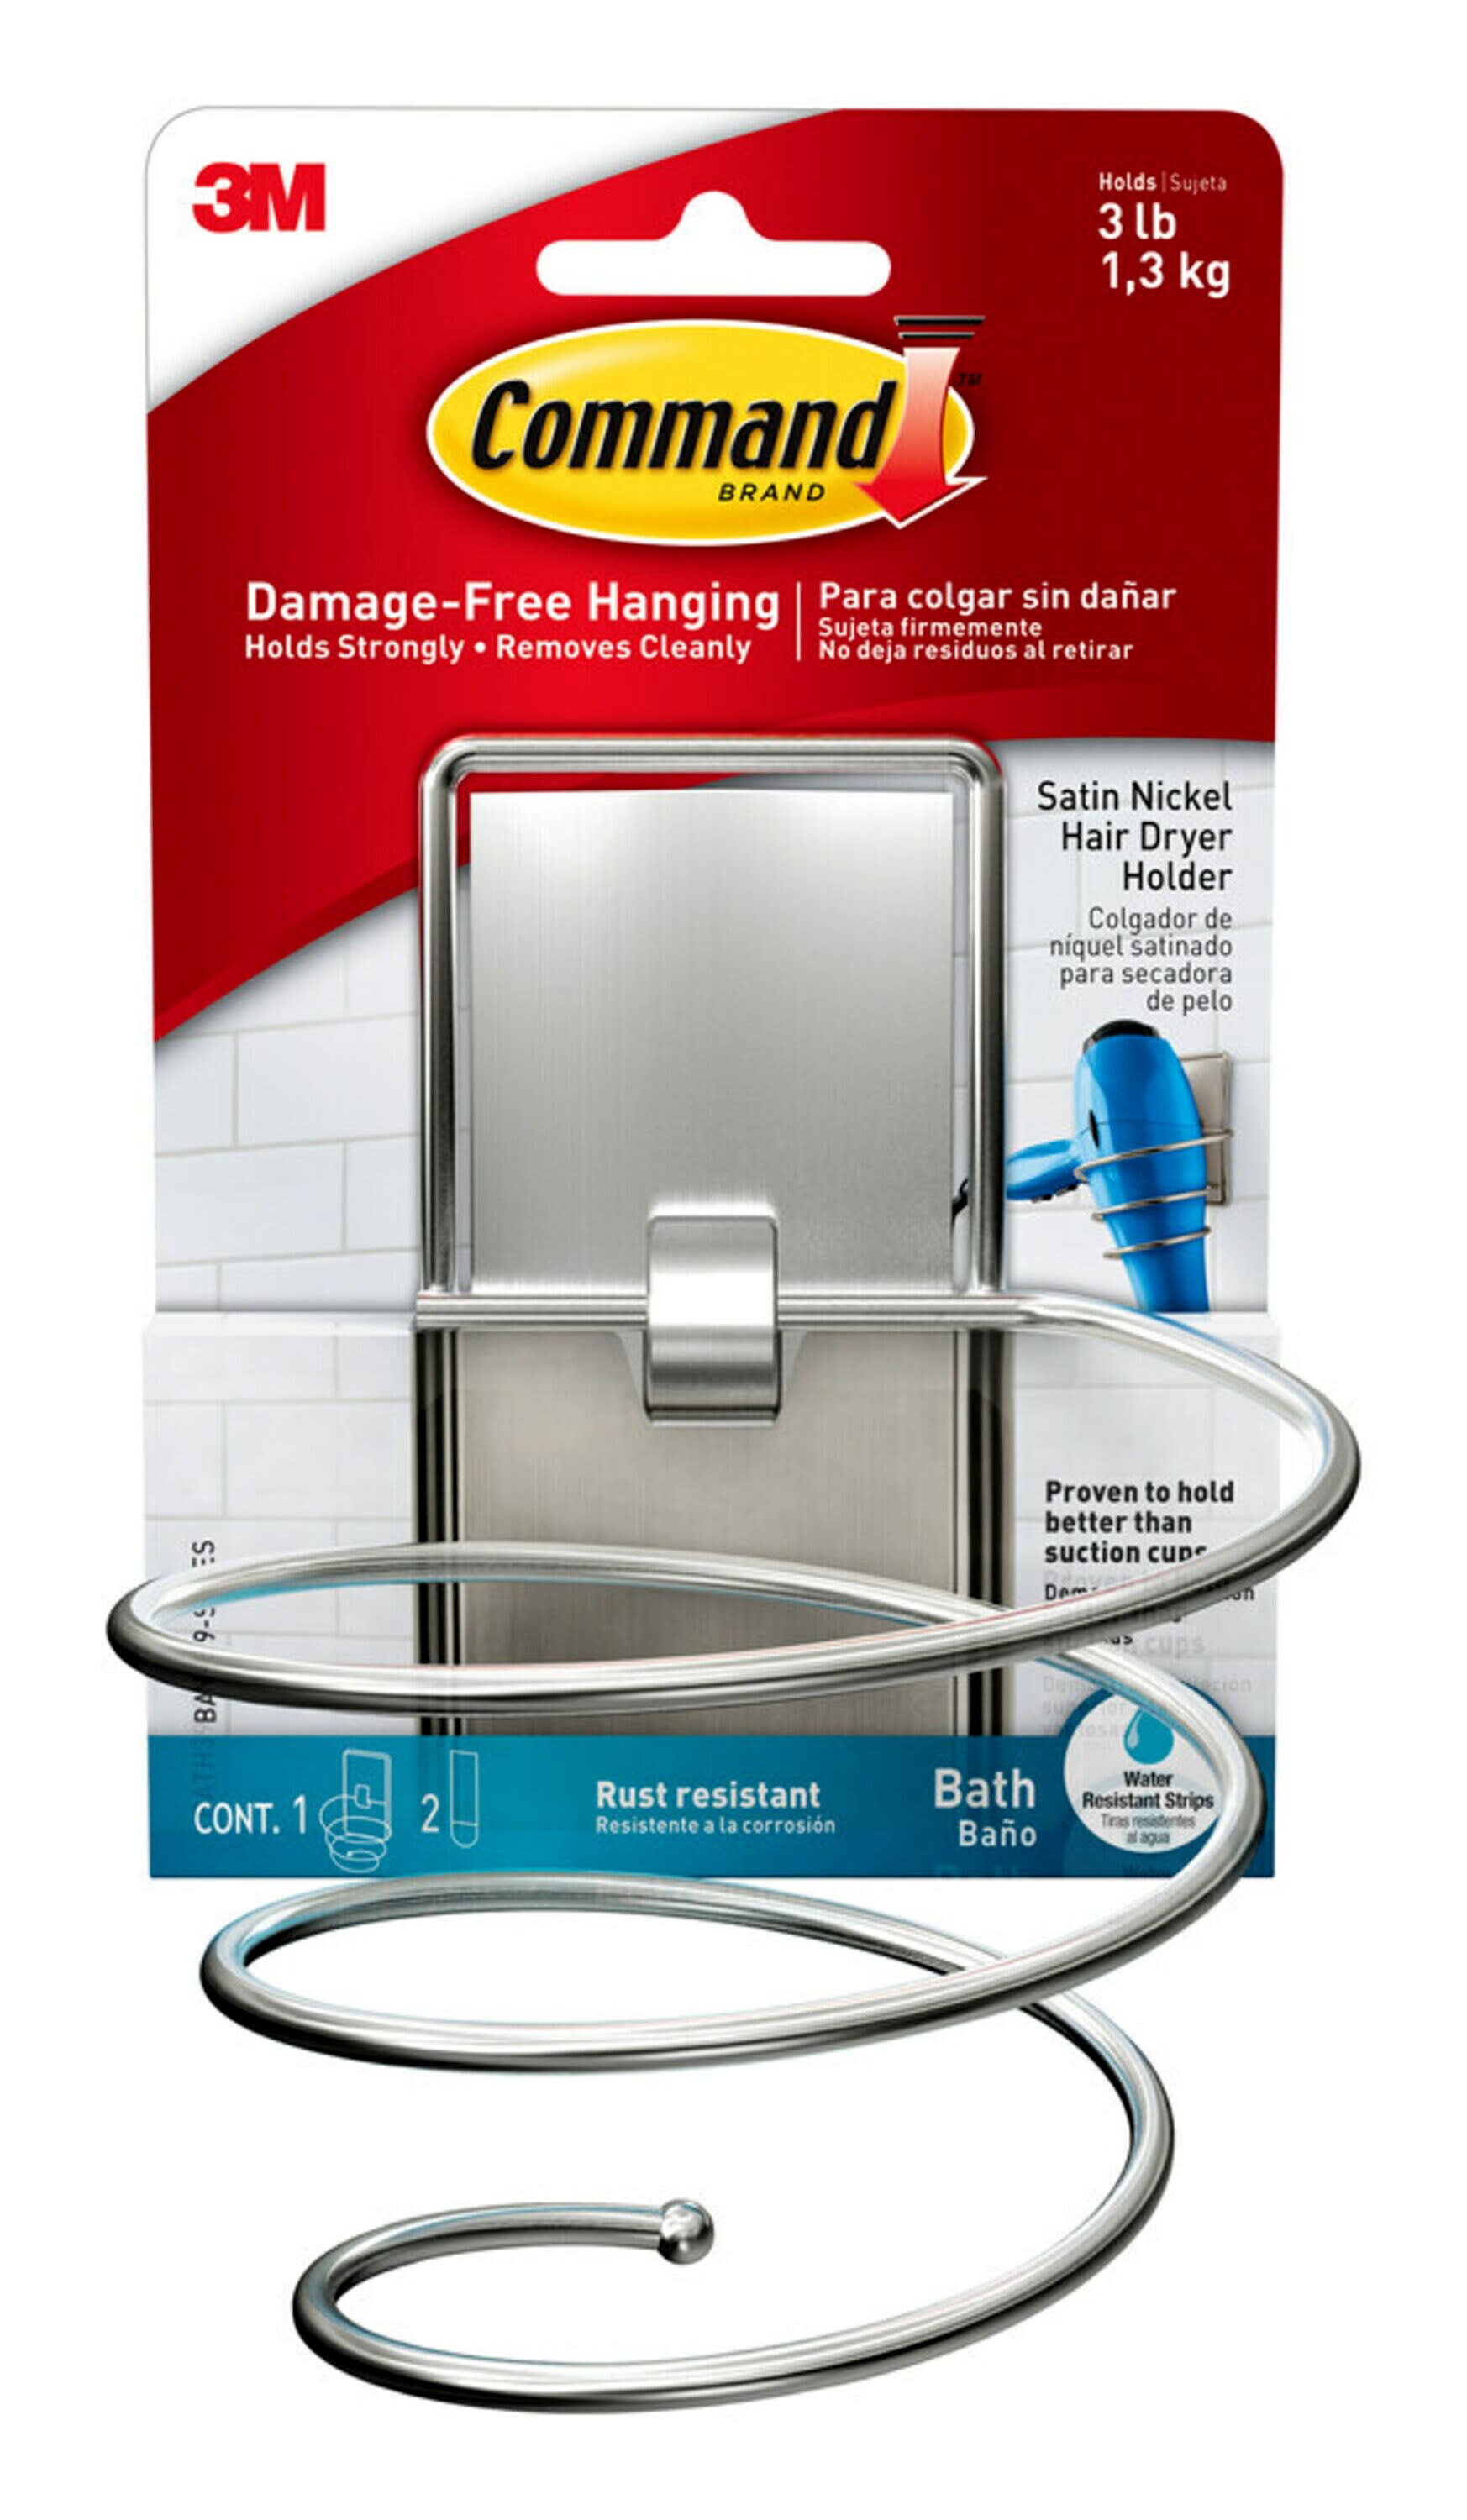 Command Hair Dryer Holder, Satin Nickel, 1 Holder, 2 Water Resistant Strips, Bathroom Organization - image 1 of 12